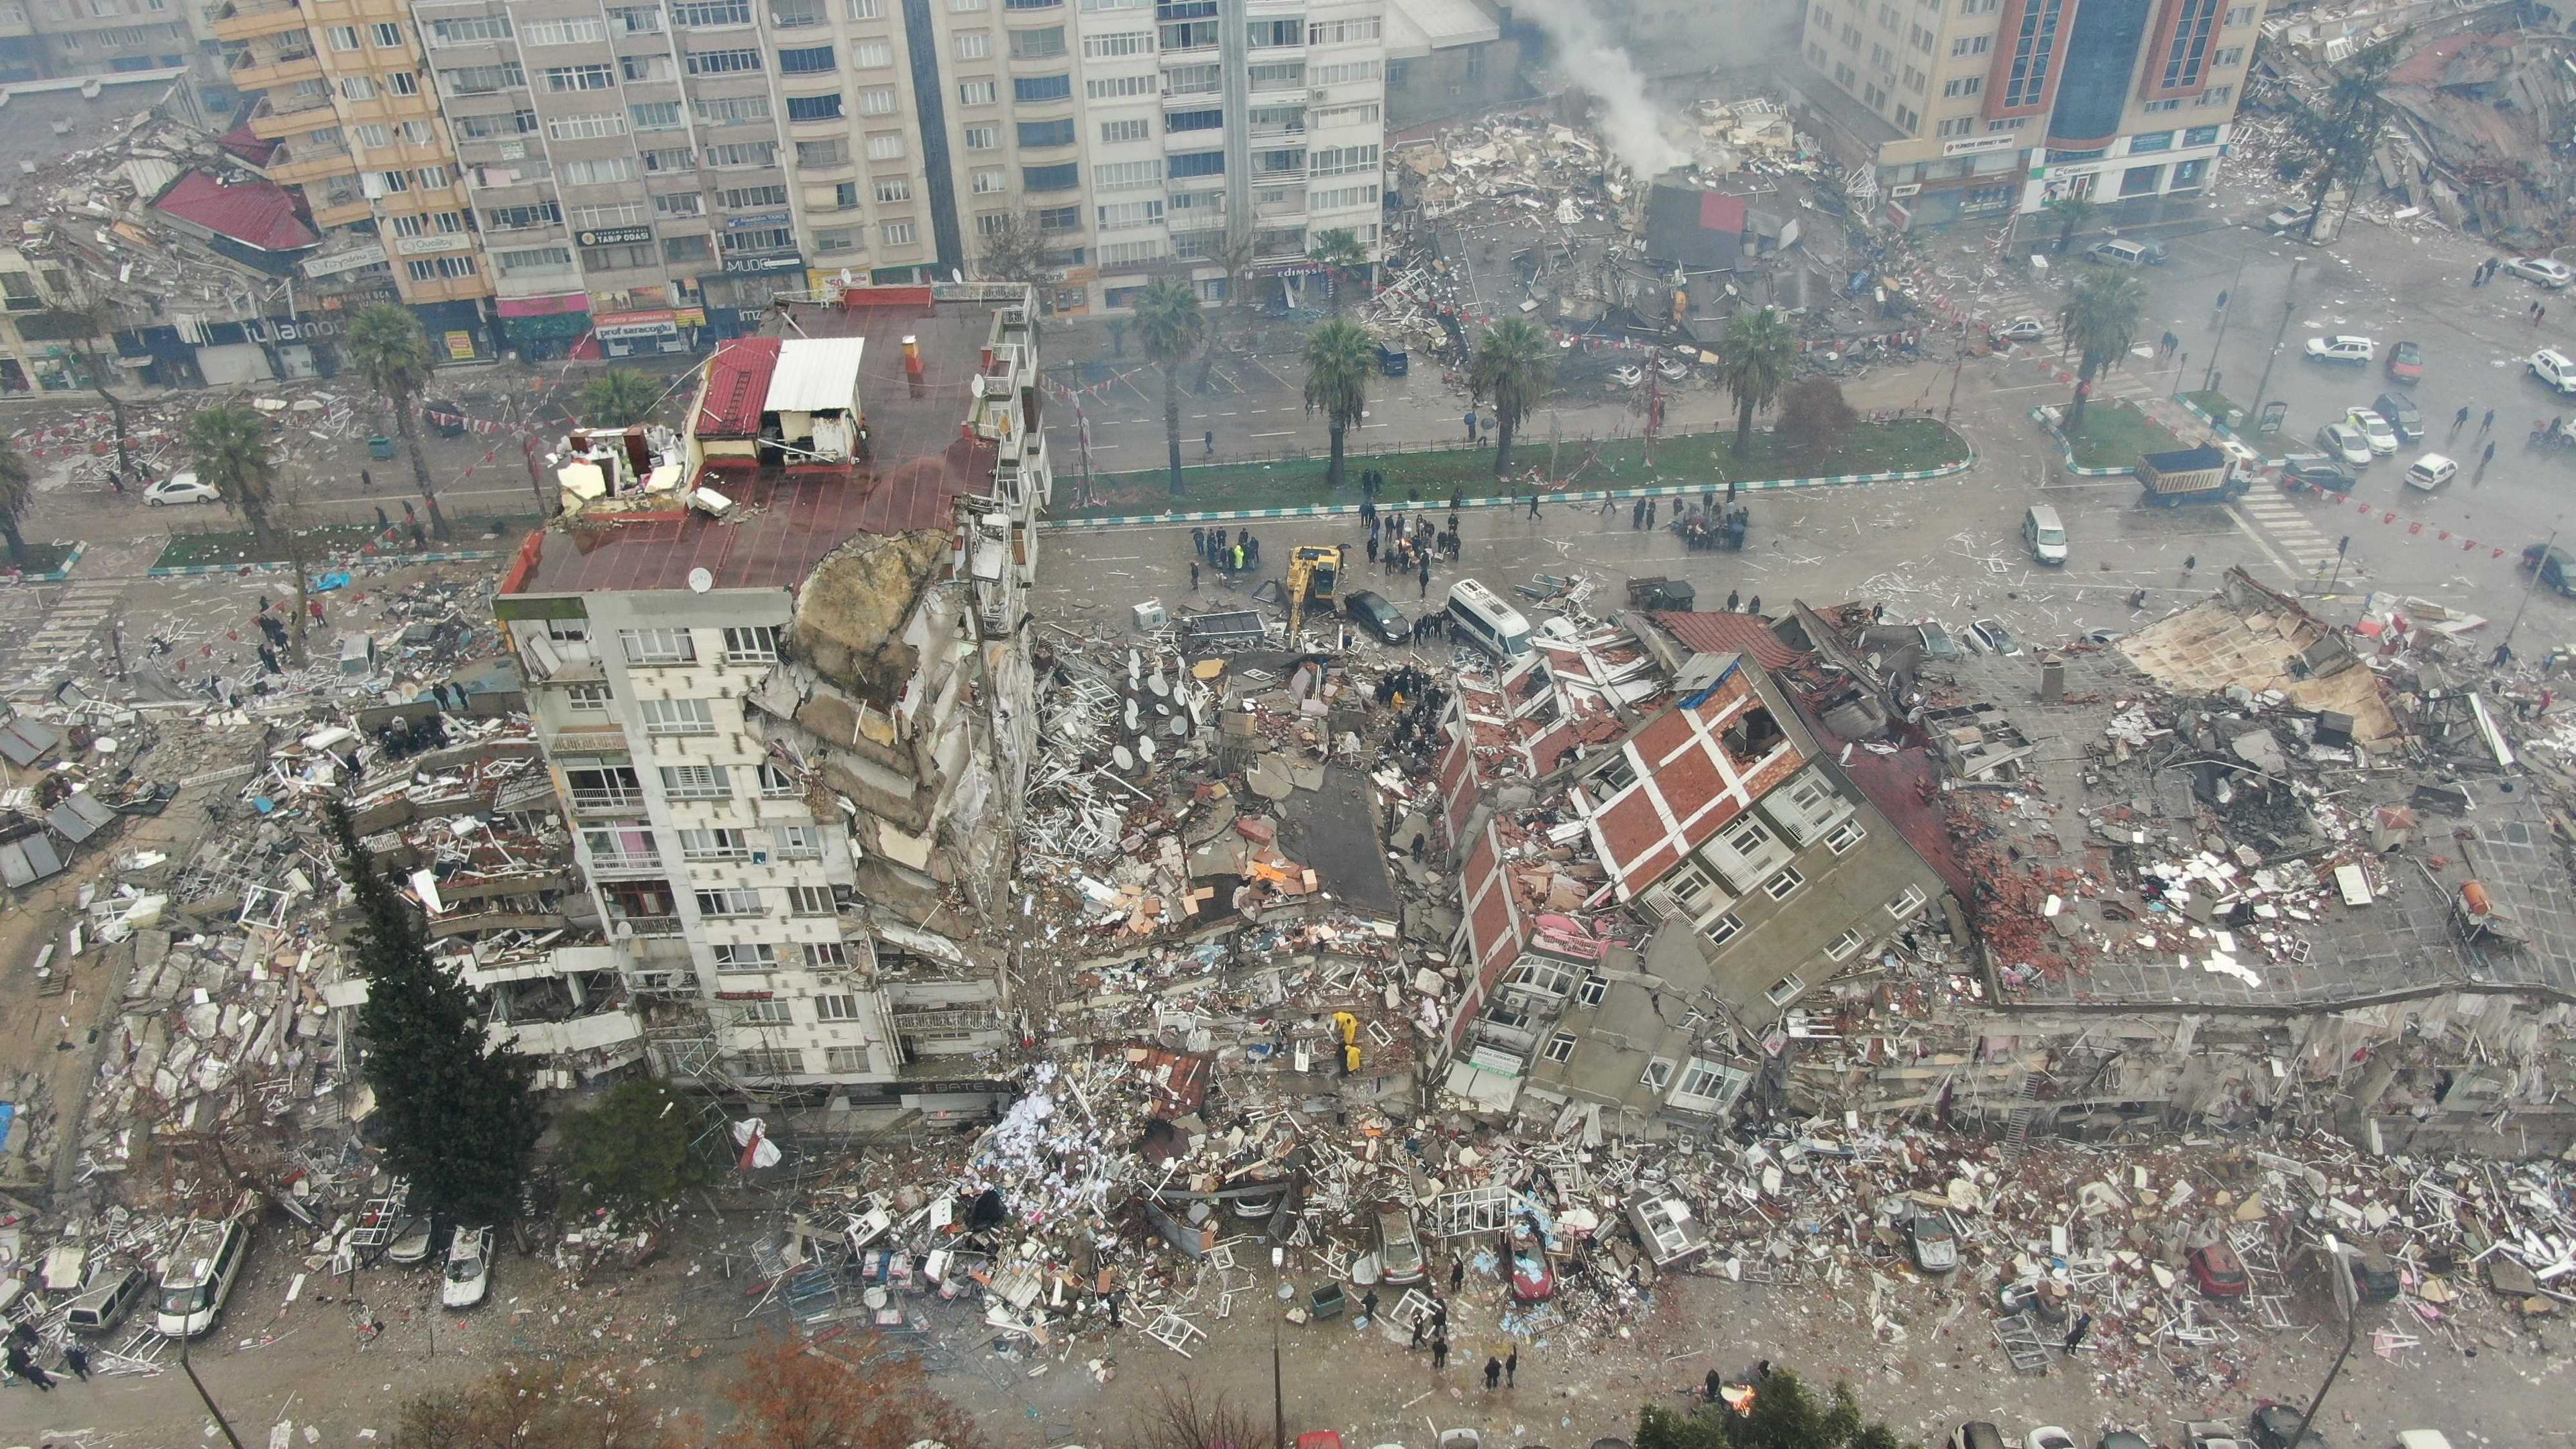 Pandangan dari atas menunjukkan bangunan runtuh susulan gempa bumi yang melanda bandar Kahramanmaras di Turkiye. Gambar: Reuters.